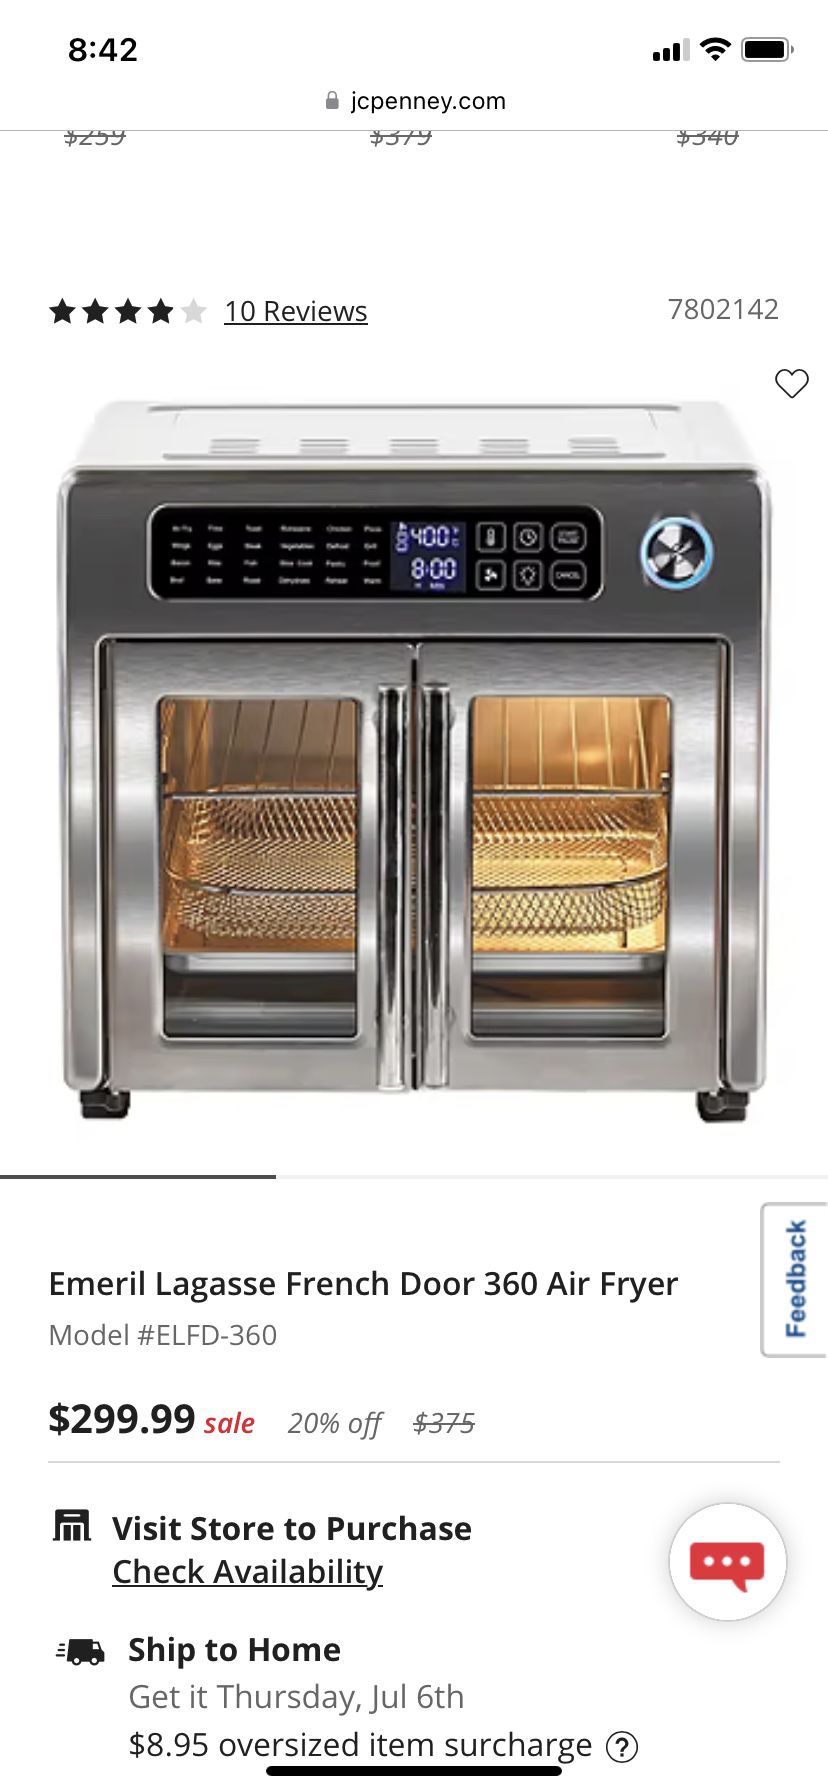 Emeril Lagasse French Door Air Fryer 360 - Silver